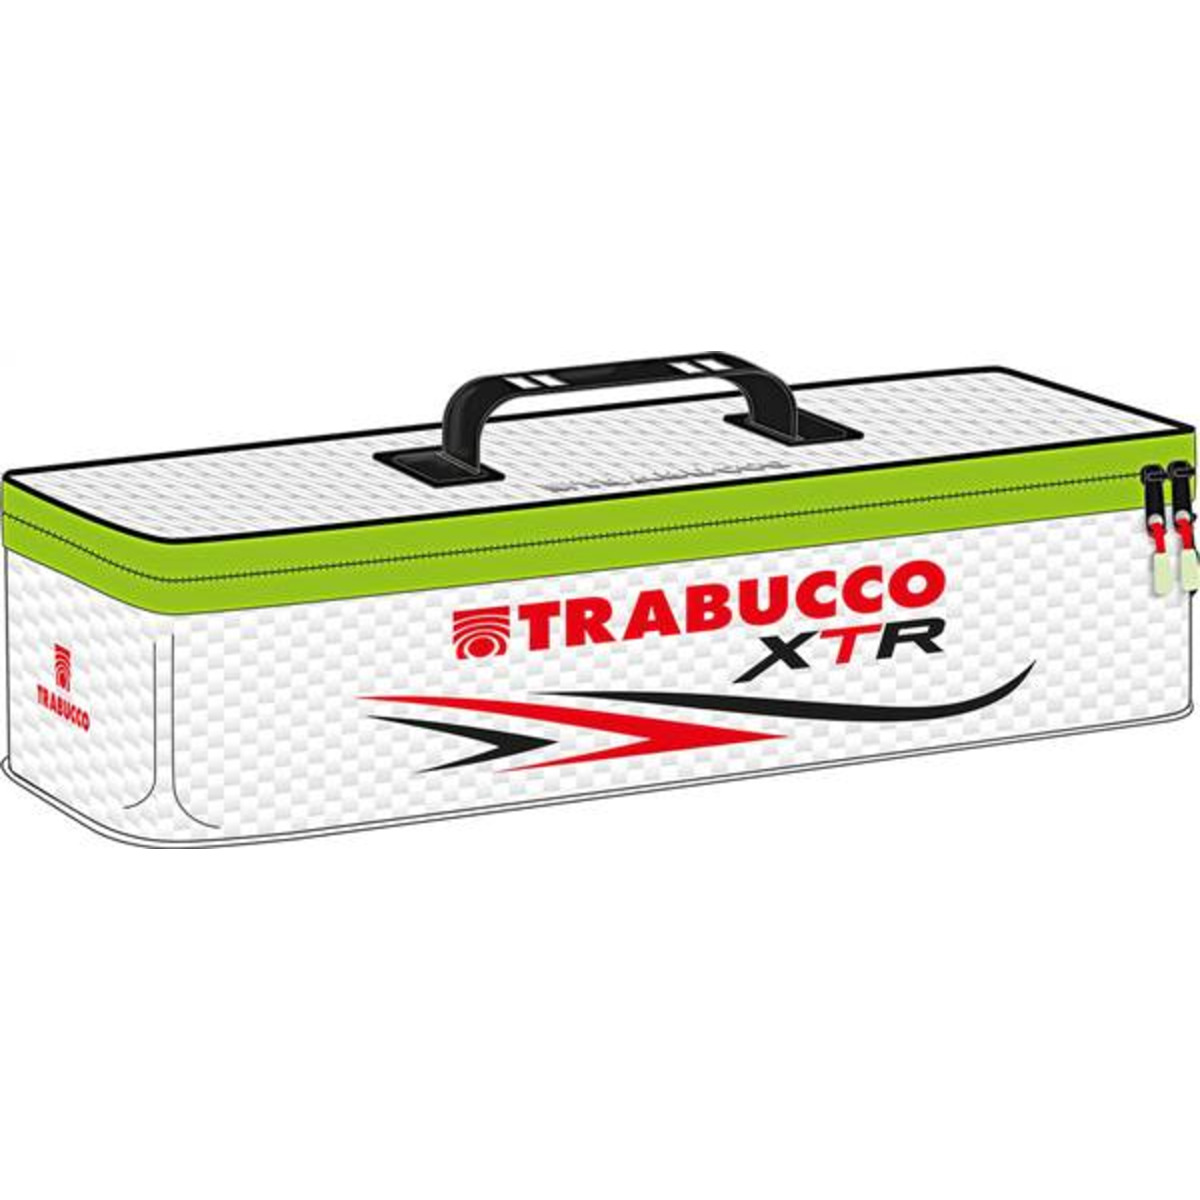 Trabucco Eva White Accessories Bags - 40x10x10 cm